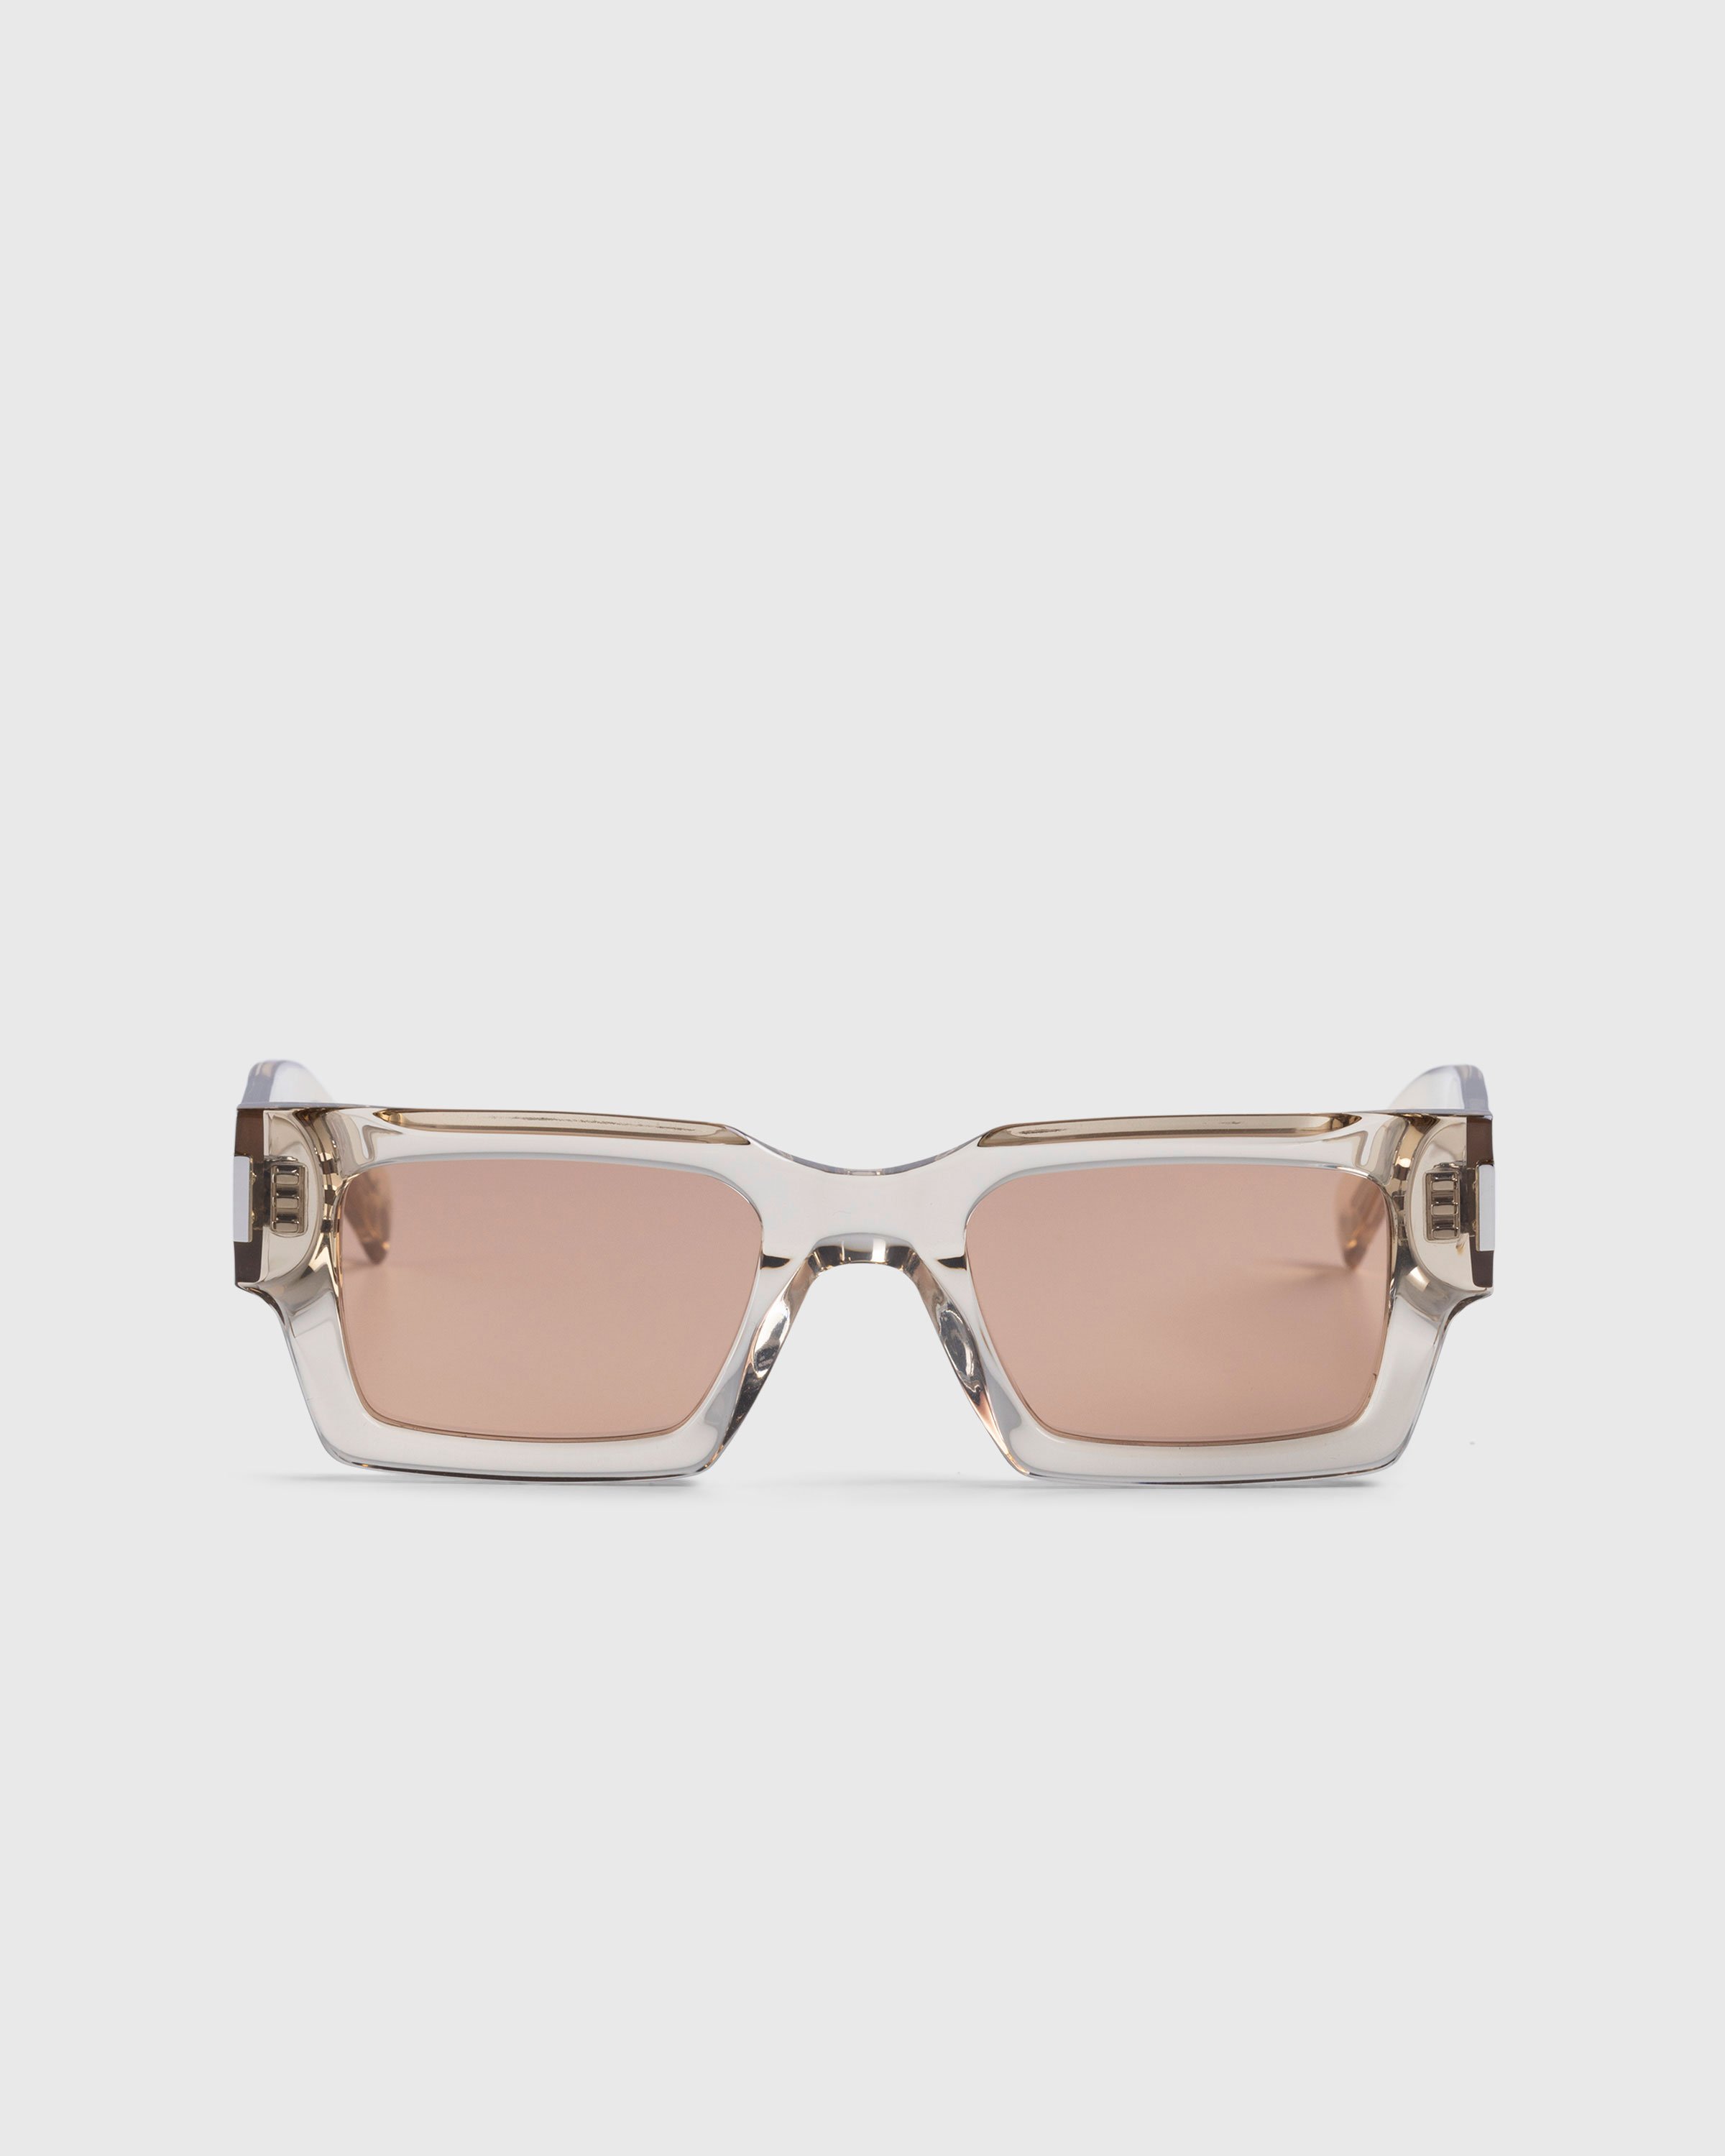 Saint Laurent - SL 572 Square Frame Sunglasses Yellow/Brown - Accessories - Multi - Image 1